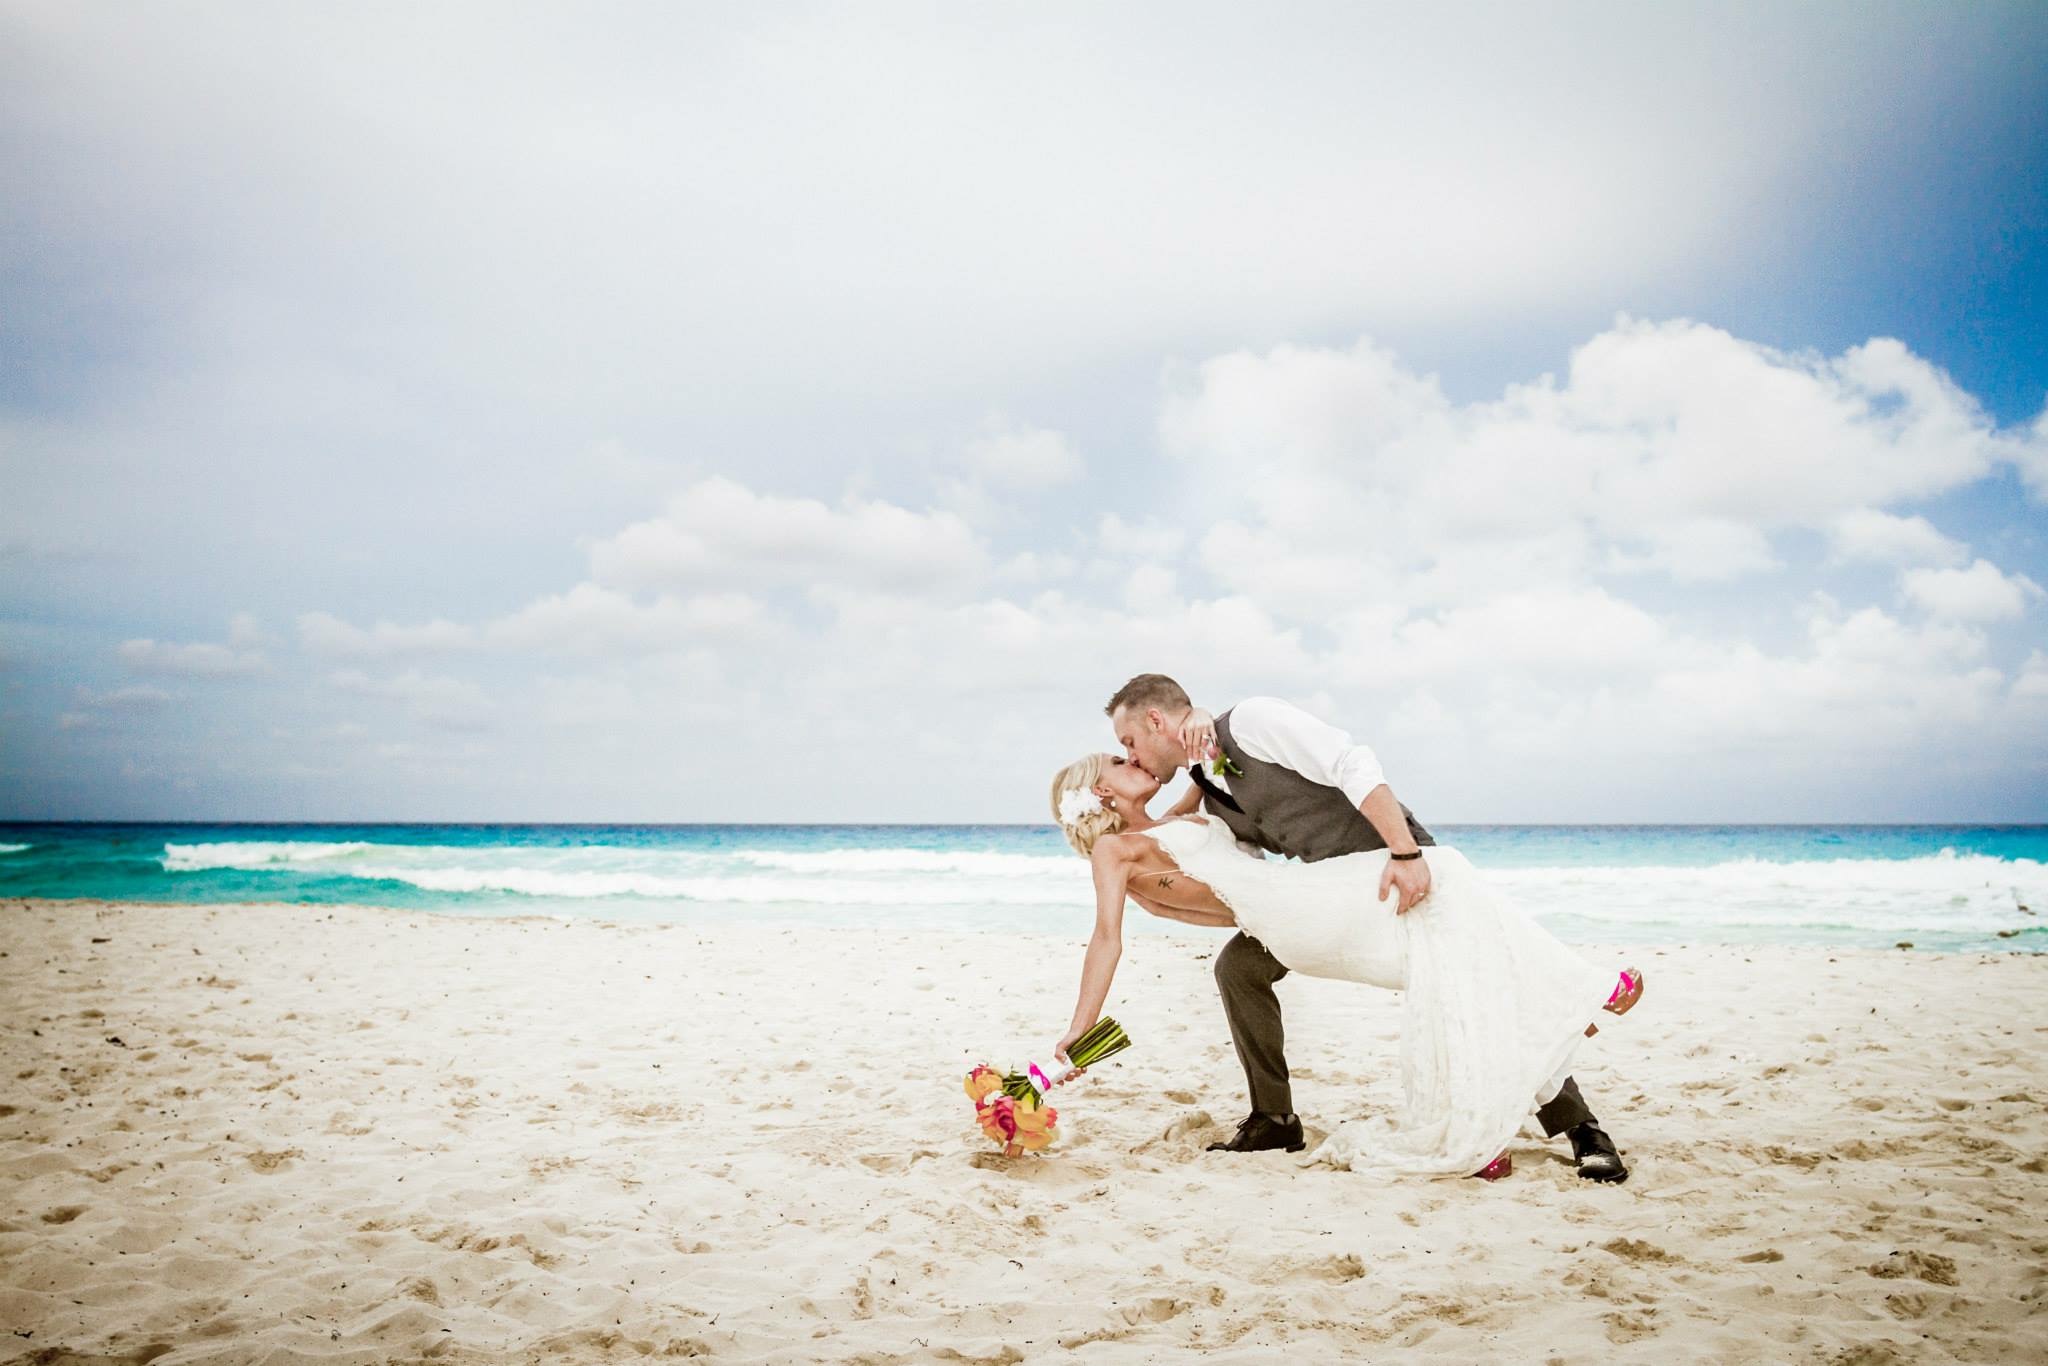 krysten-reed-cancun-beach-wedding-19.JPG